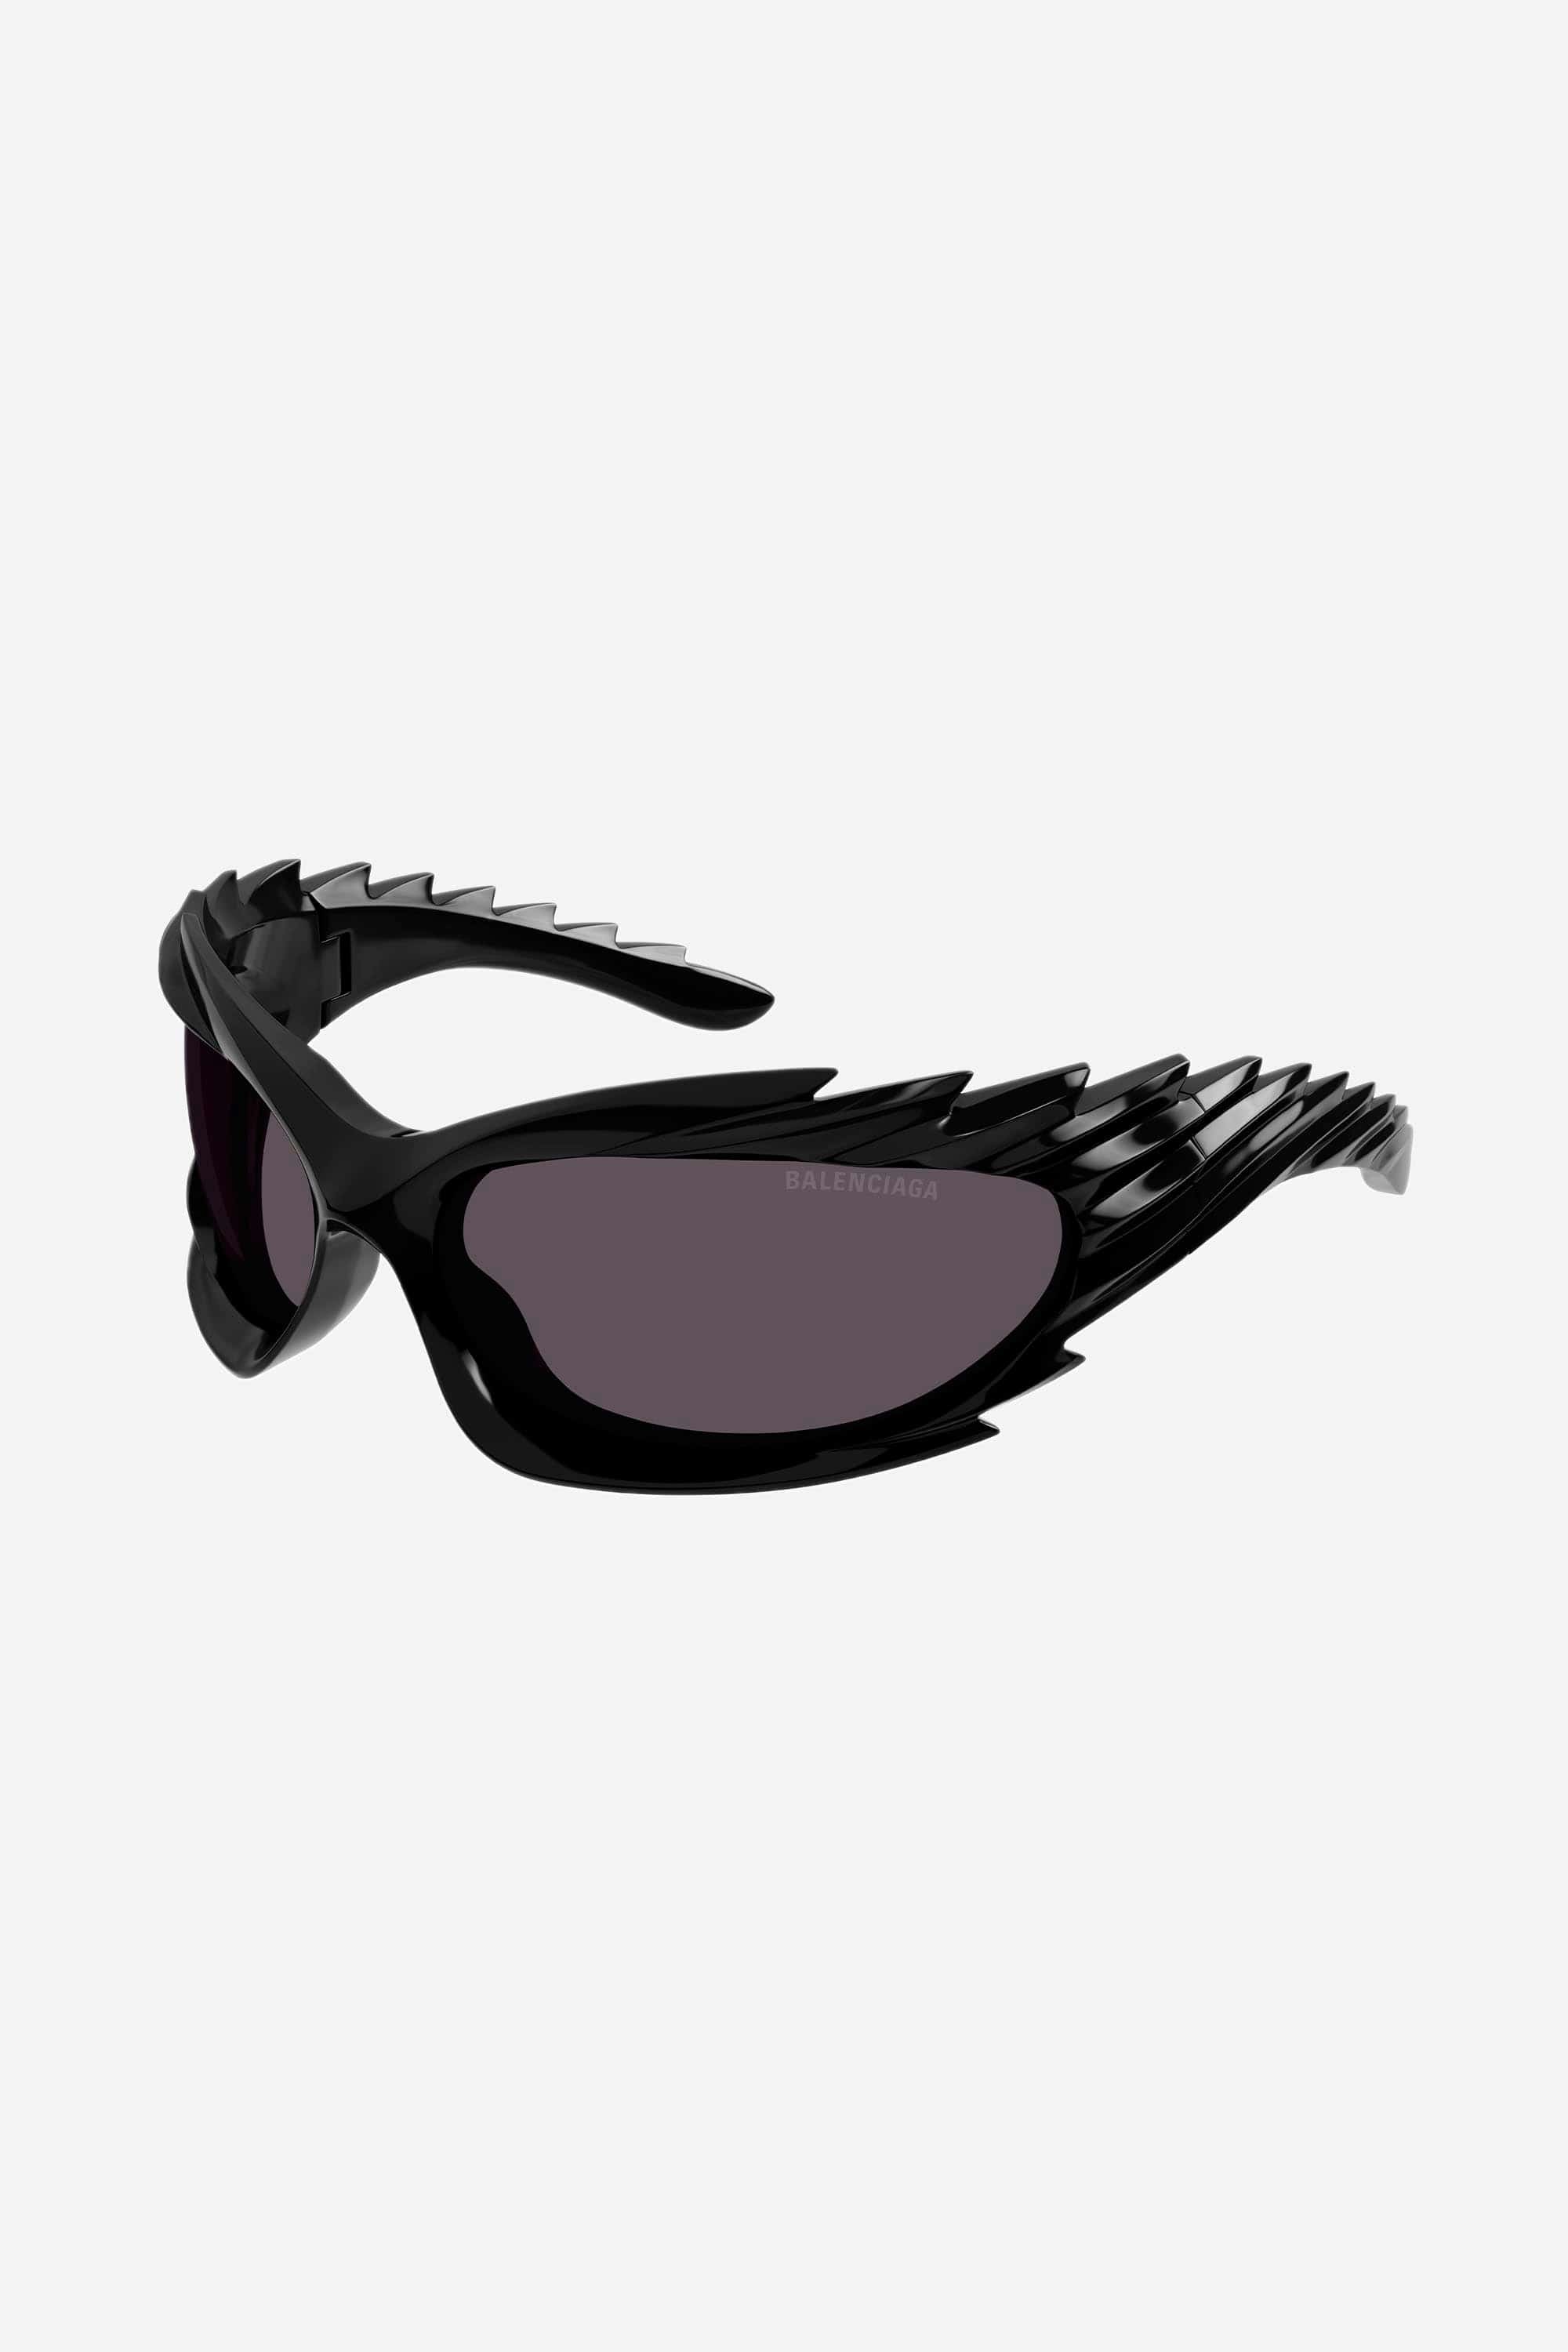 Balenciaga Spike rectangle sunglasses in black - Eyewear Club